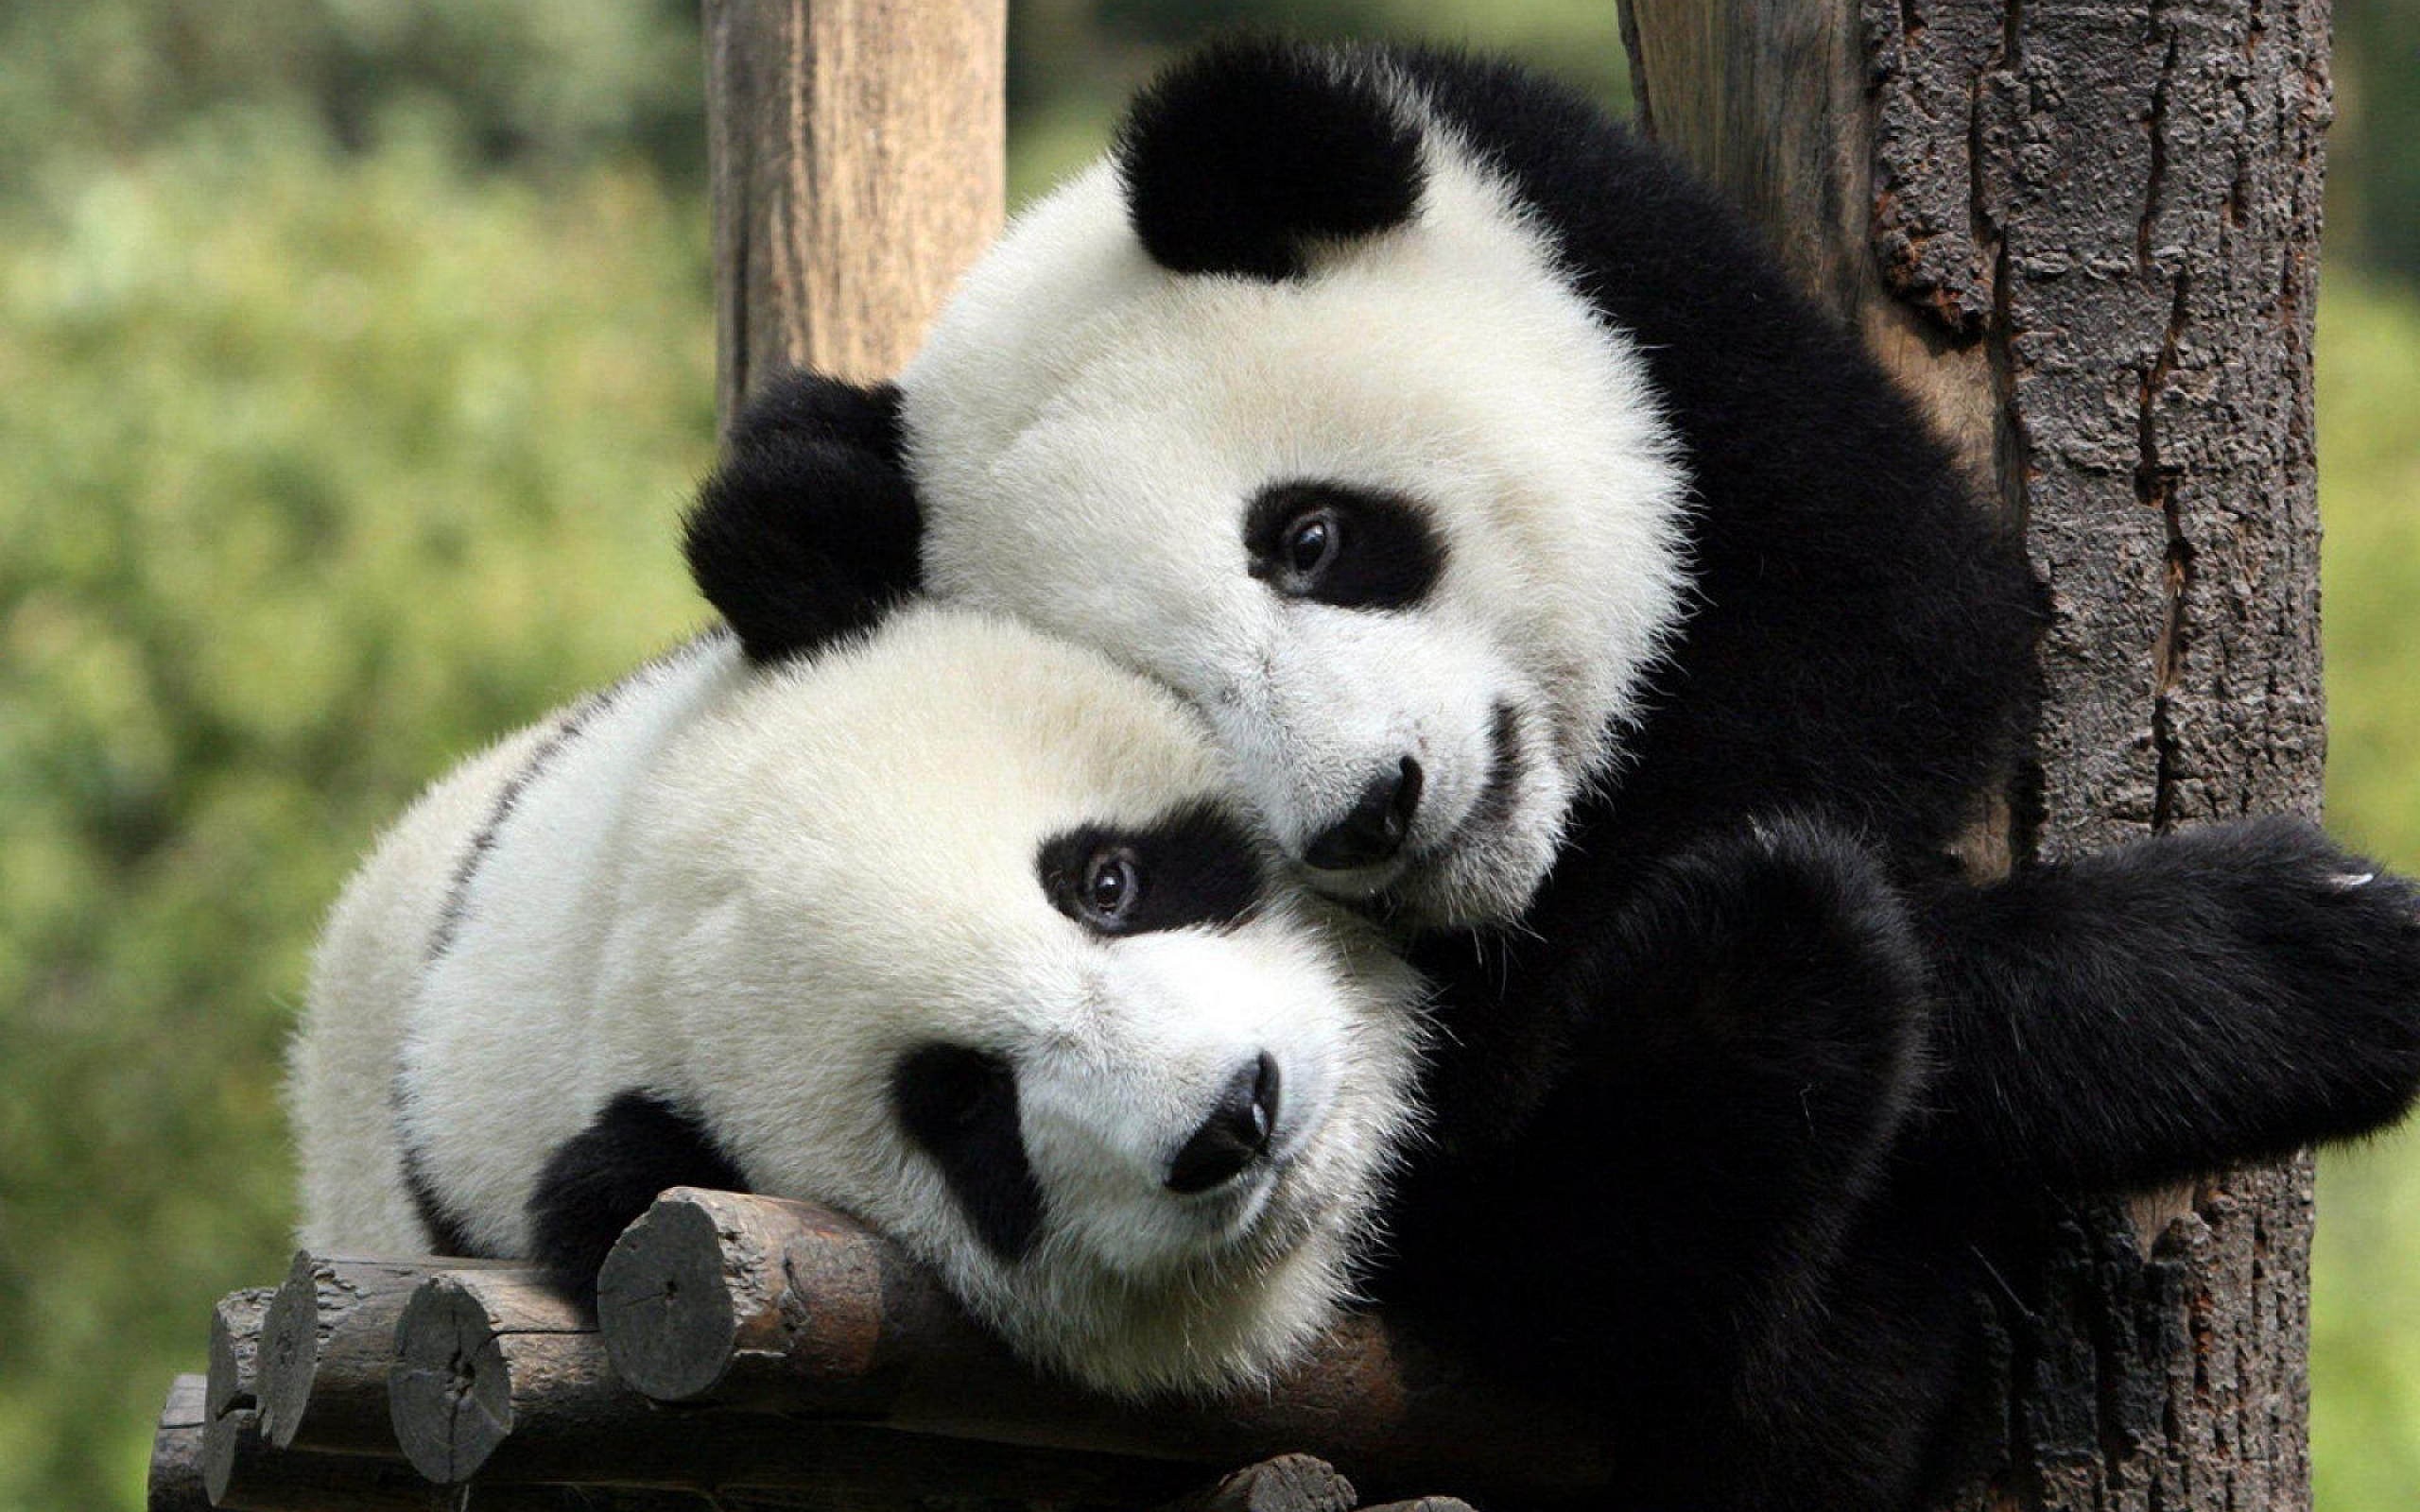 File:6990634-panda-hug.jpg - Wikimedia Commons